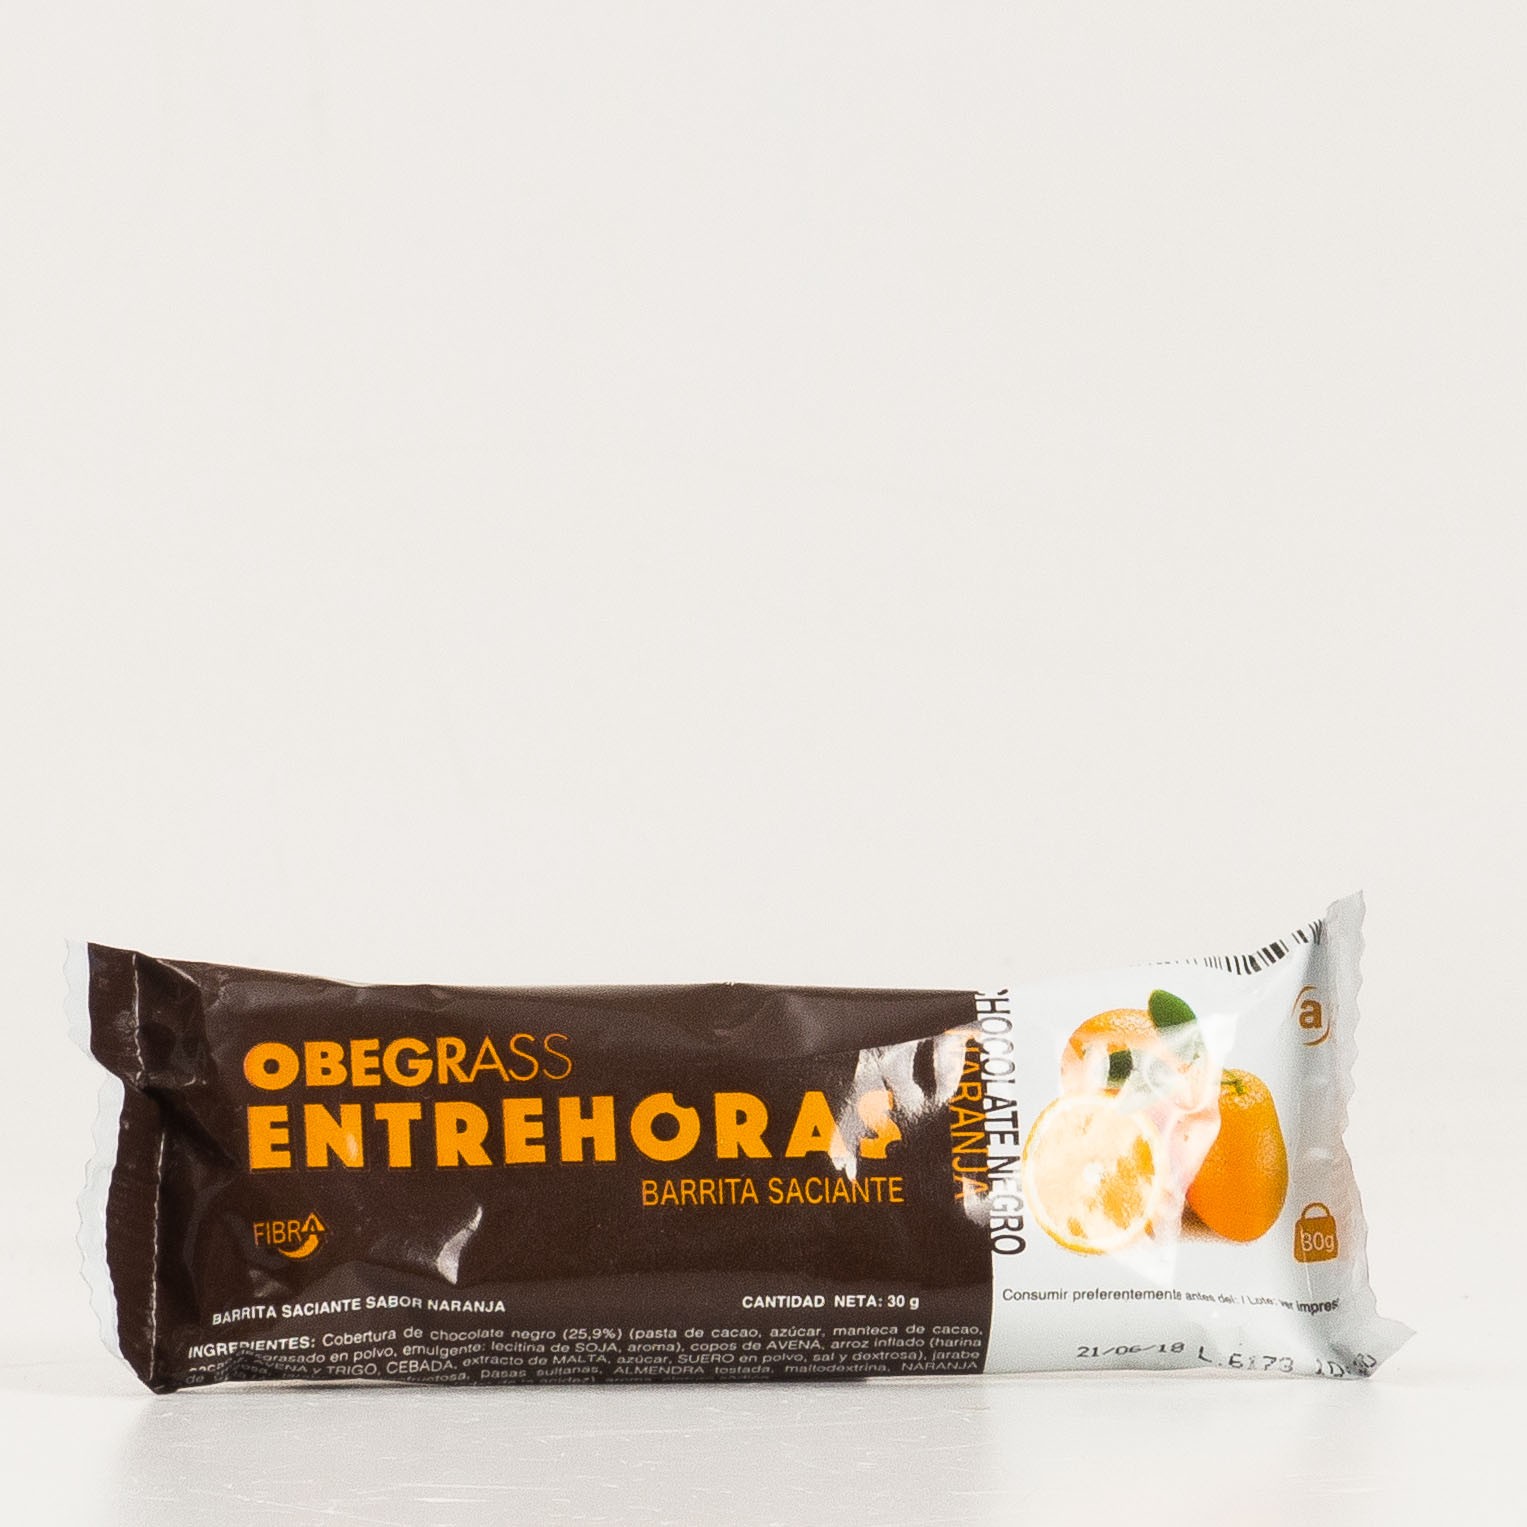 Obegrass Entrehoras Barrita Saciante Chocolate Negro y Naranja.